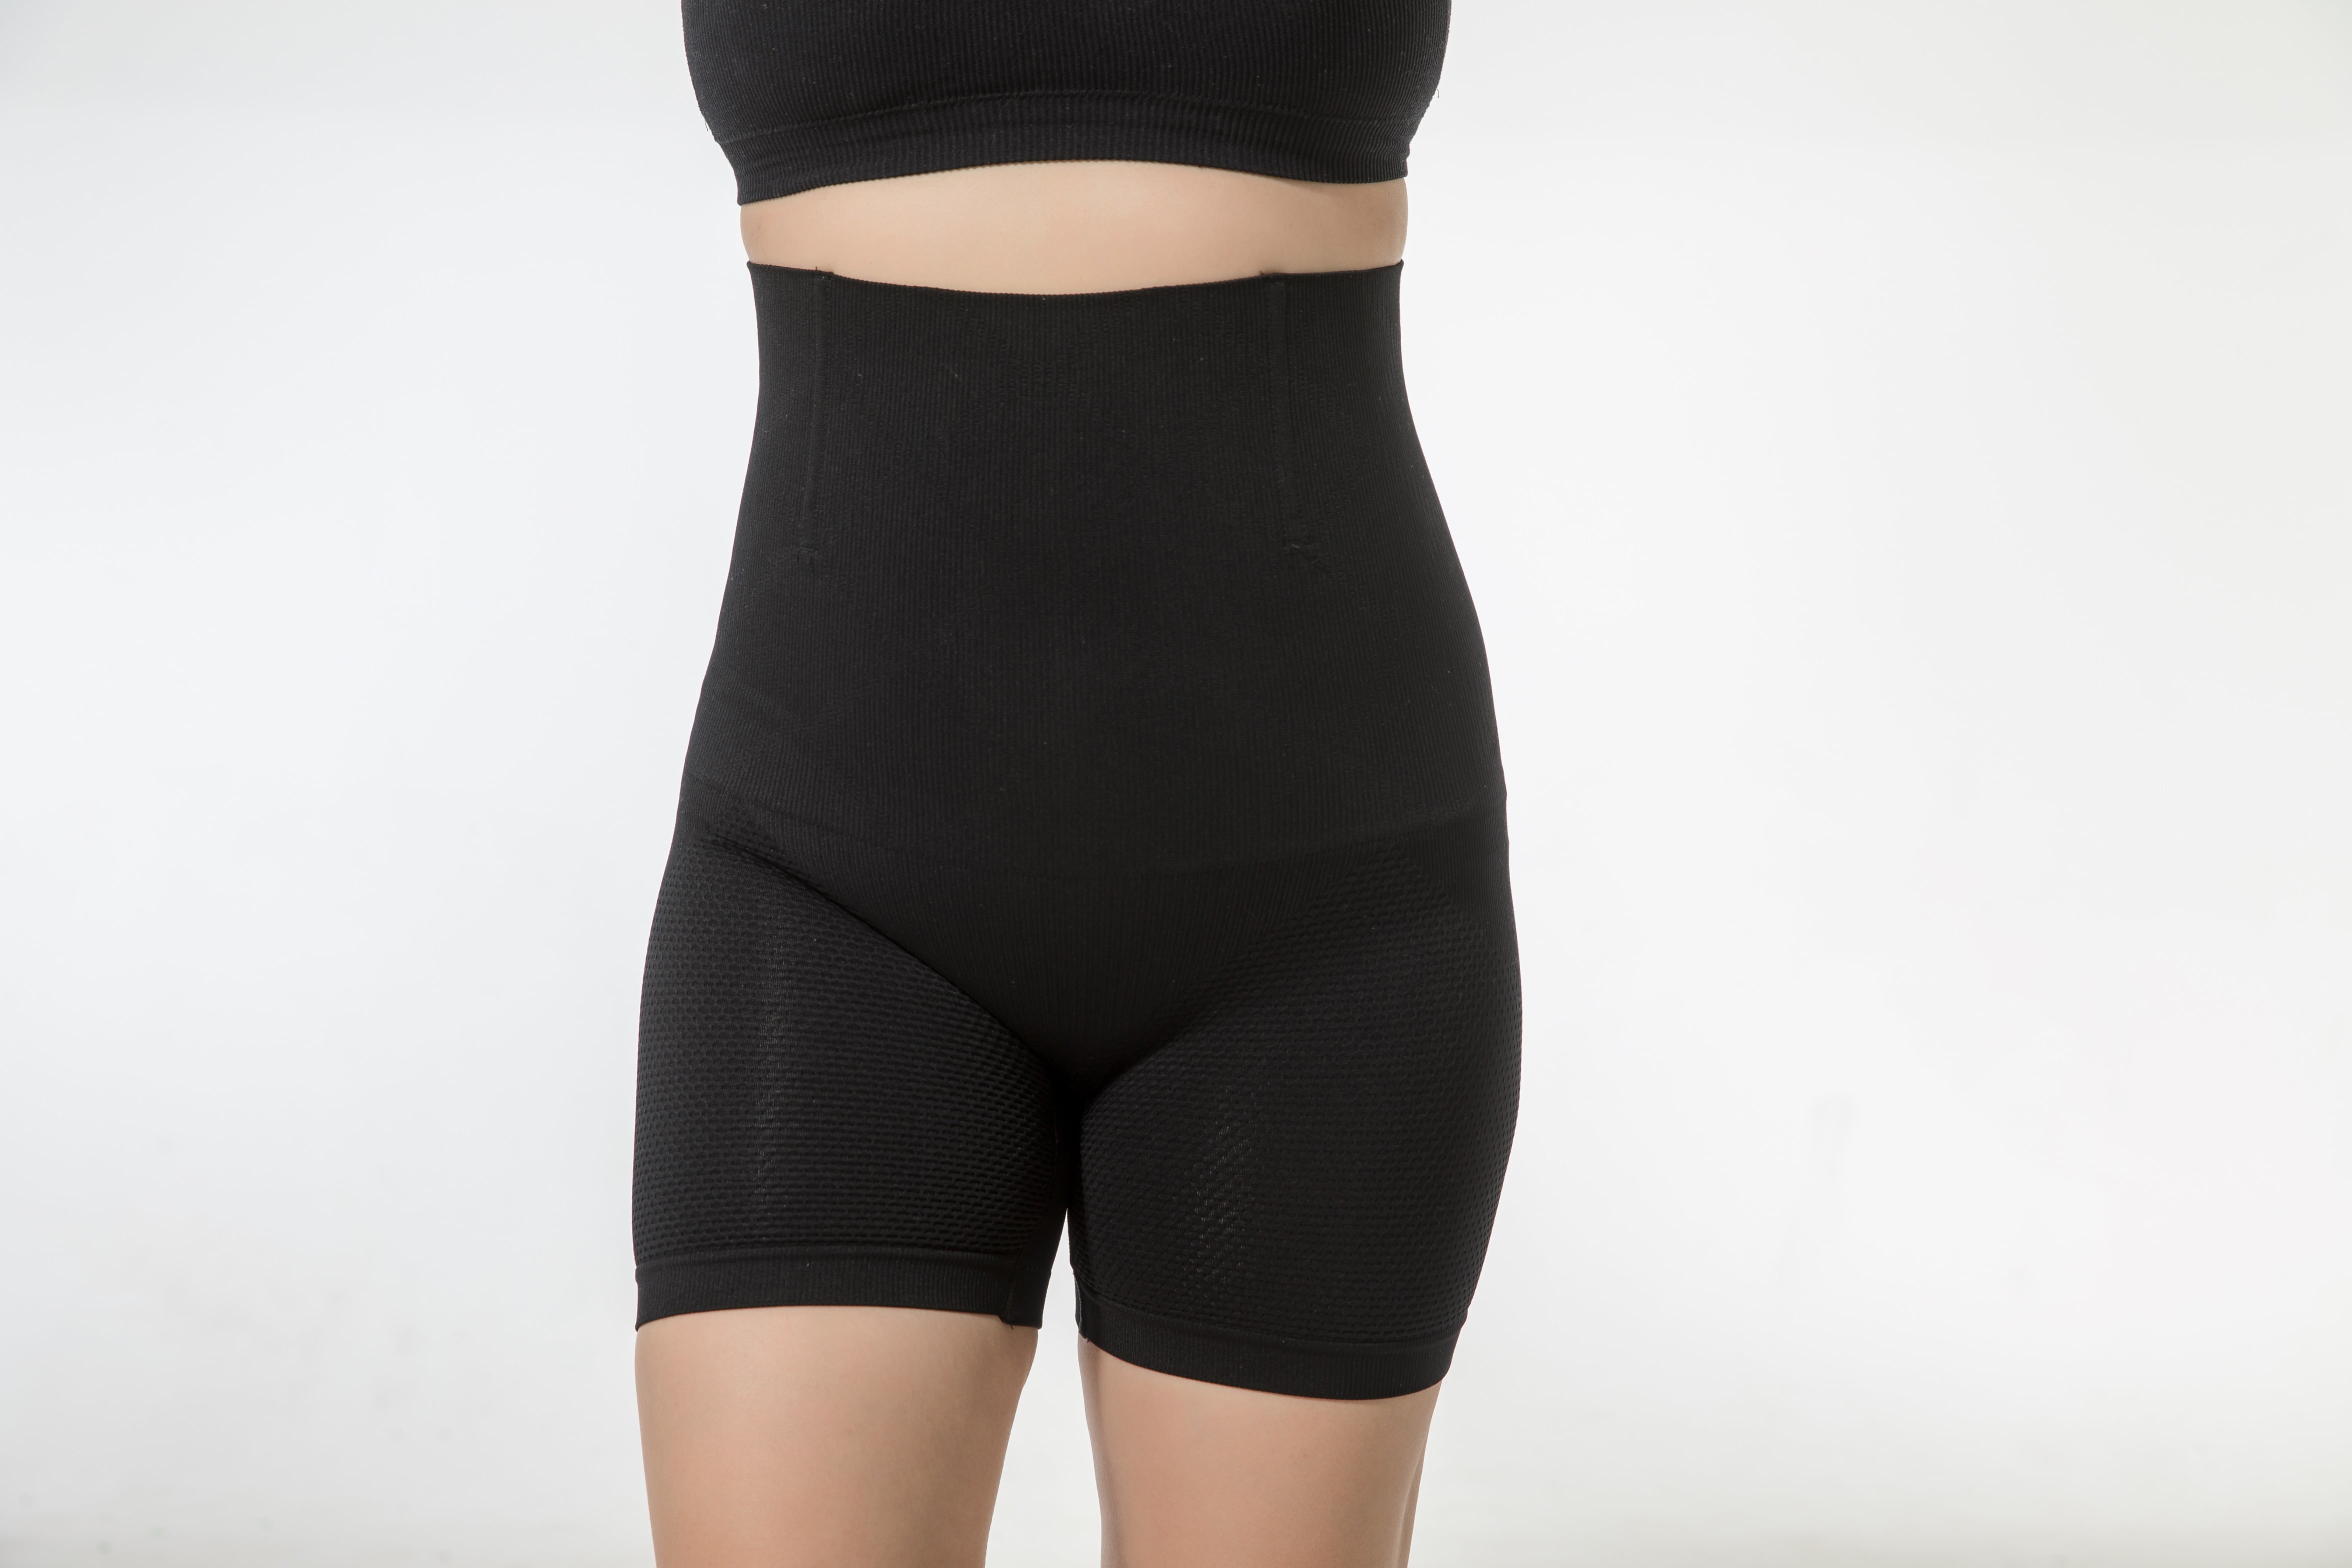 Shop Pop Fashion Plus Size Shapewear for Women - Thigh Slimming